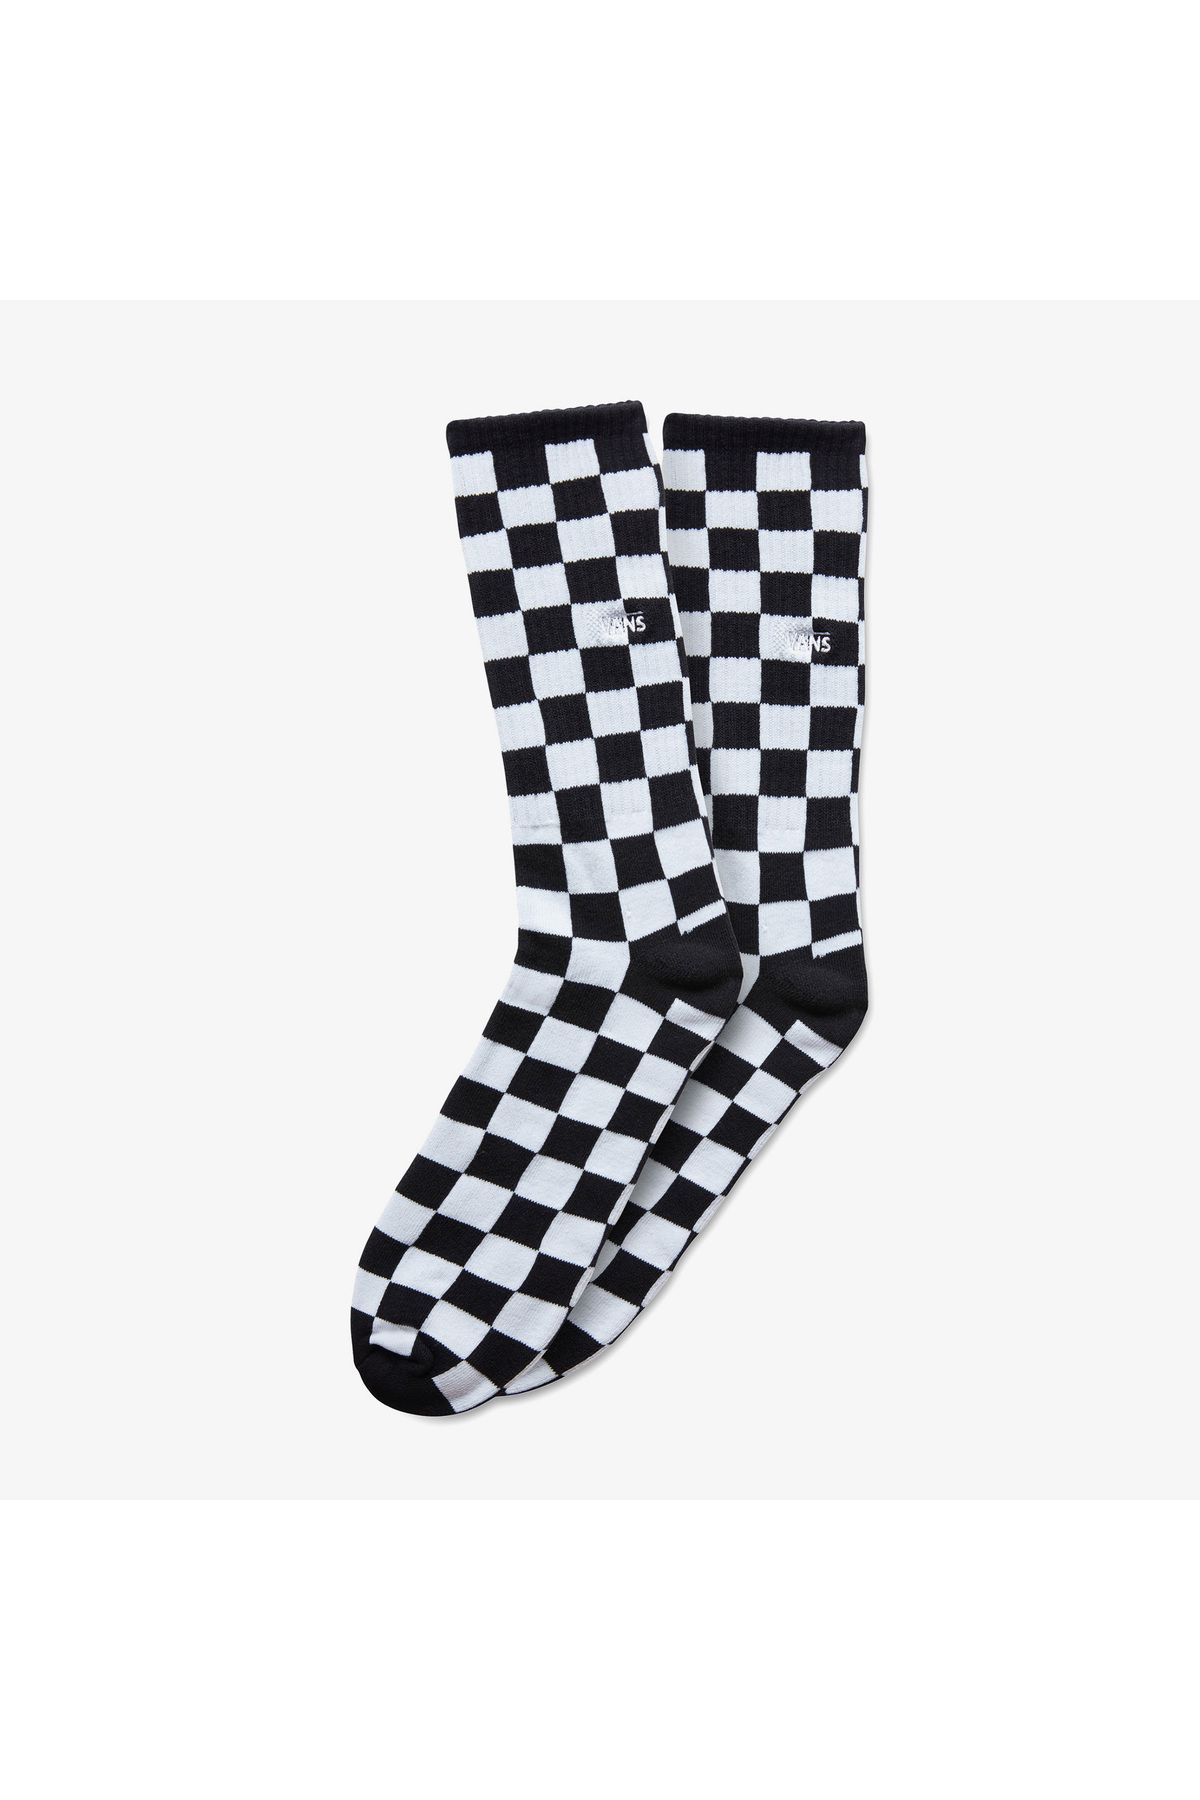 Vans Checkerboard Iı Crew Erkek Siyah Çorap